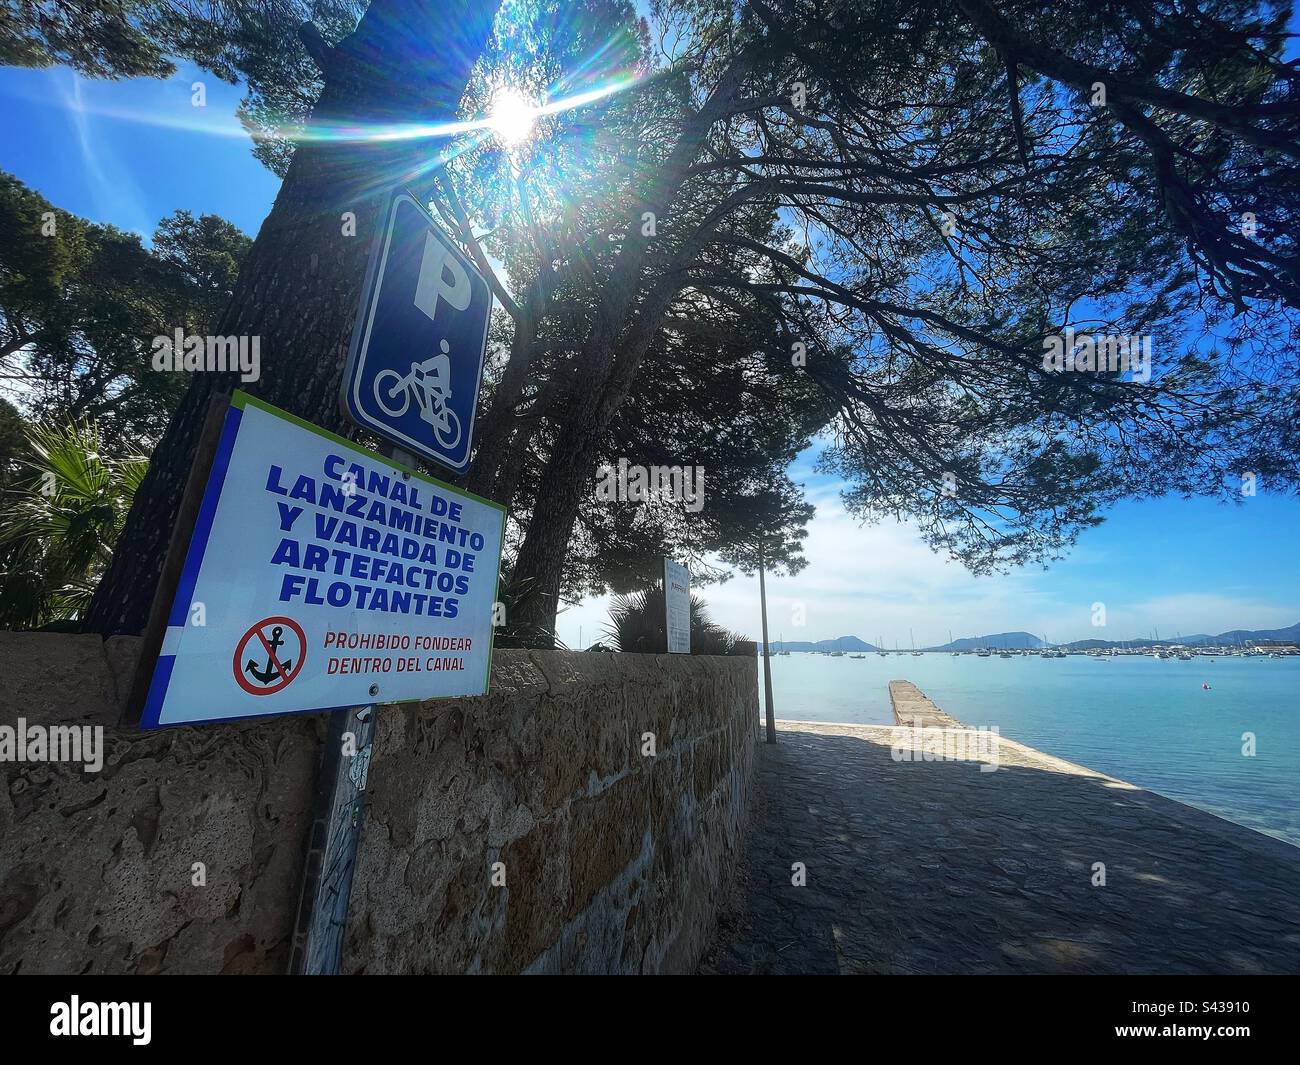 No anchor sign and jetty with tree on the seafront. Bay of Pollença, Mallorca. Sign reads: “CANAL DE LANZAMIENTO Y VARADA DE ARTEFACTOS FLOTANTES” Stock Photo